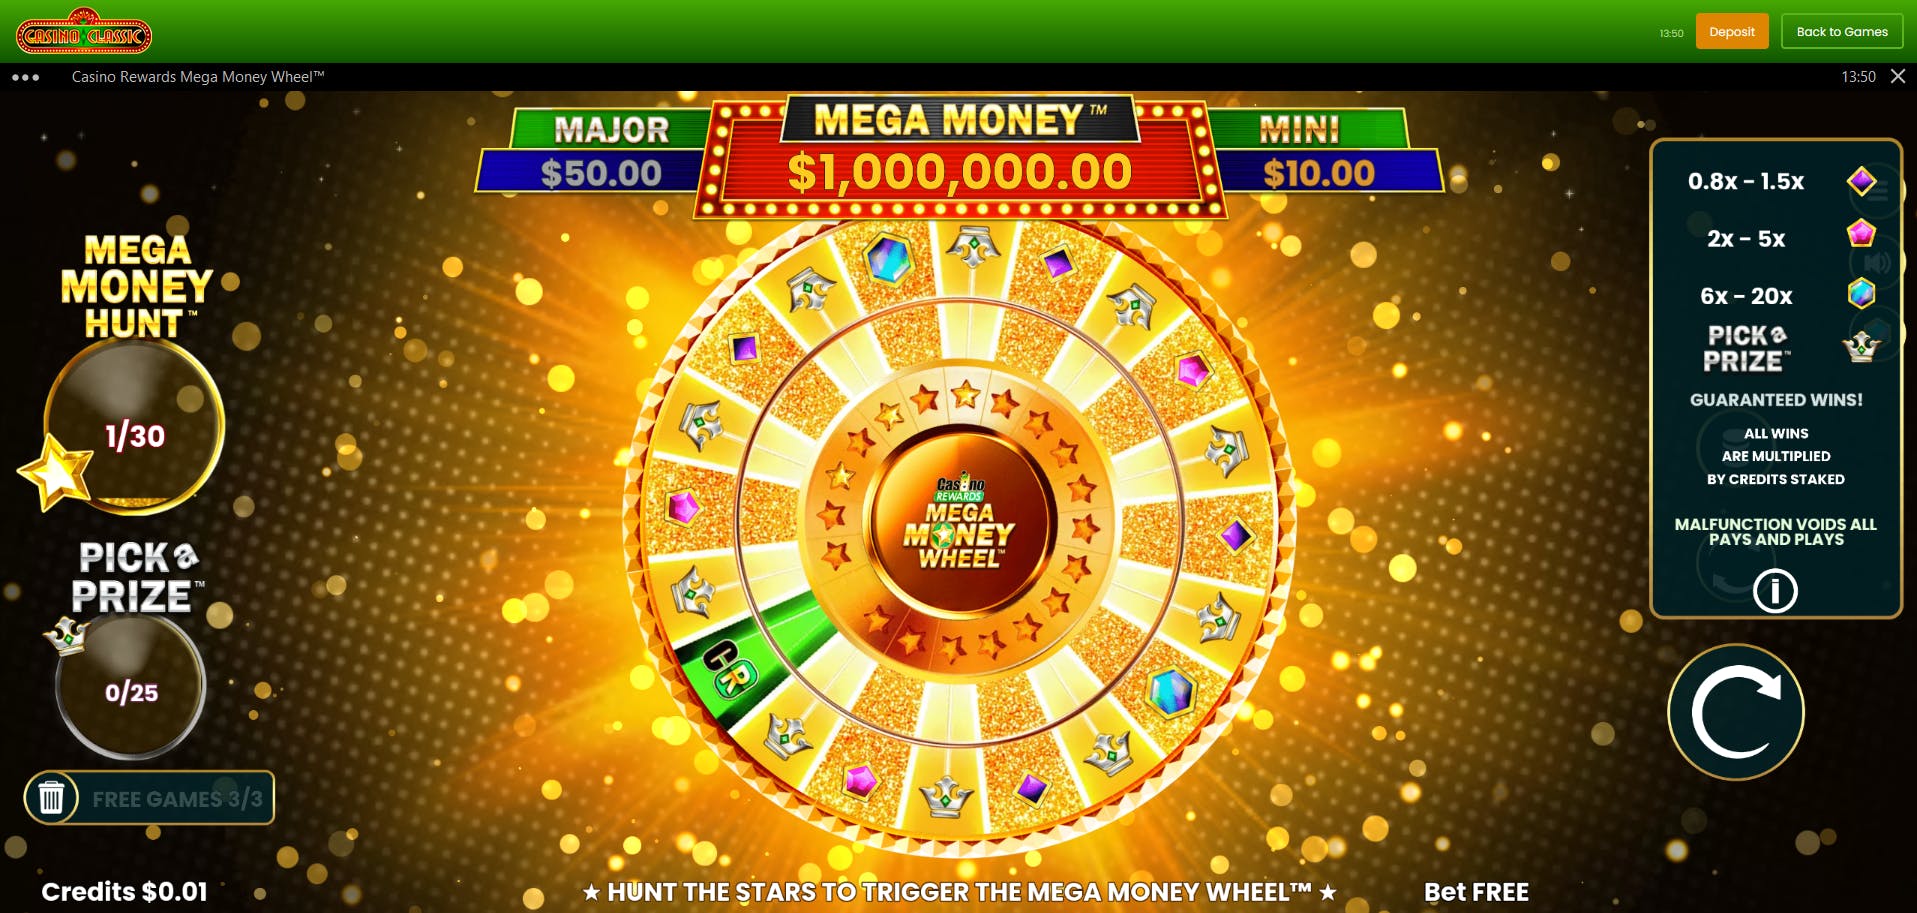 mega money wheel free spins at casino classic casino